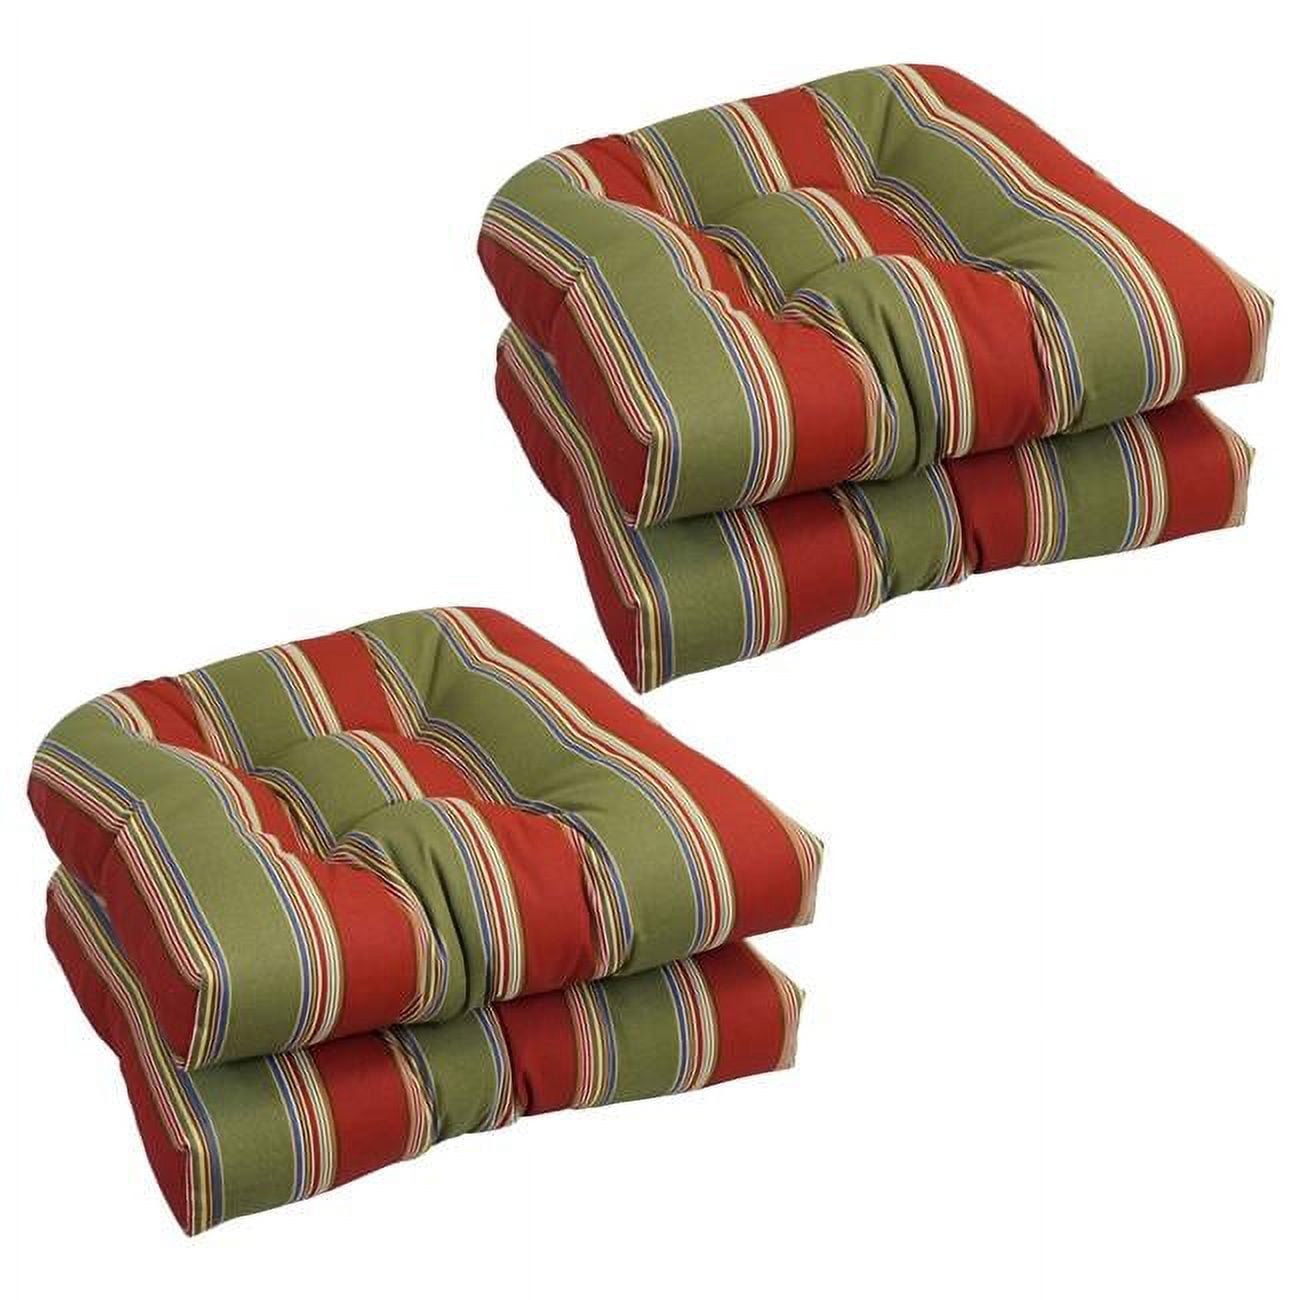 19 in. U-Shaped Dining Chair Cushions, Hampton Bay Garden - Set of 4 -  KD Gabinetes, KD2810675